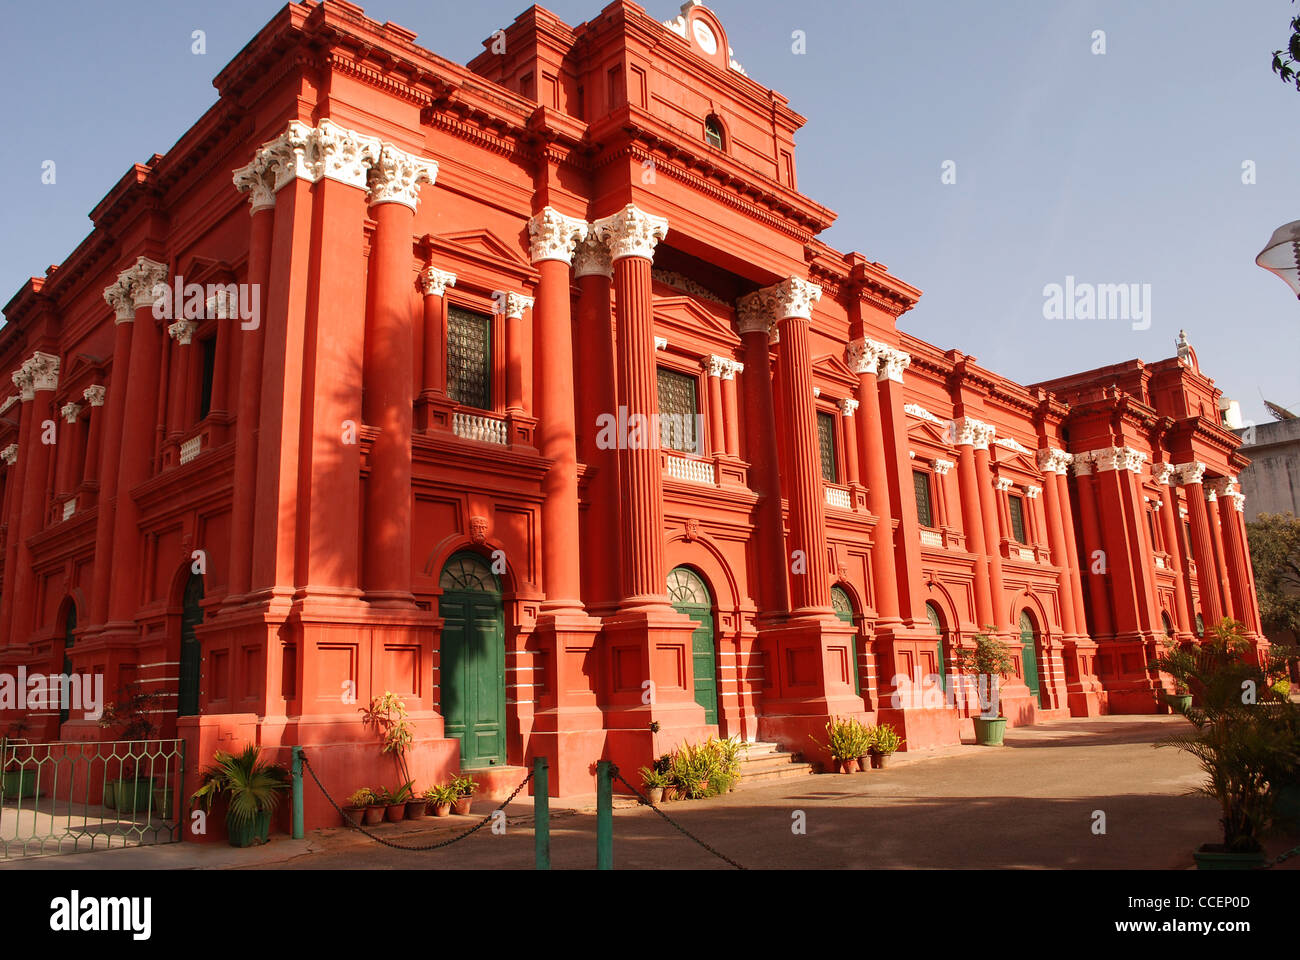 venketappa art gallery; a landmark building in bangalore,karnataka,india Stock Photo